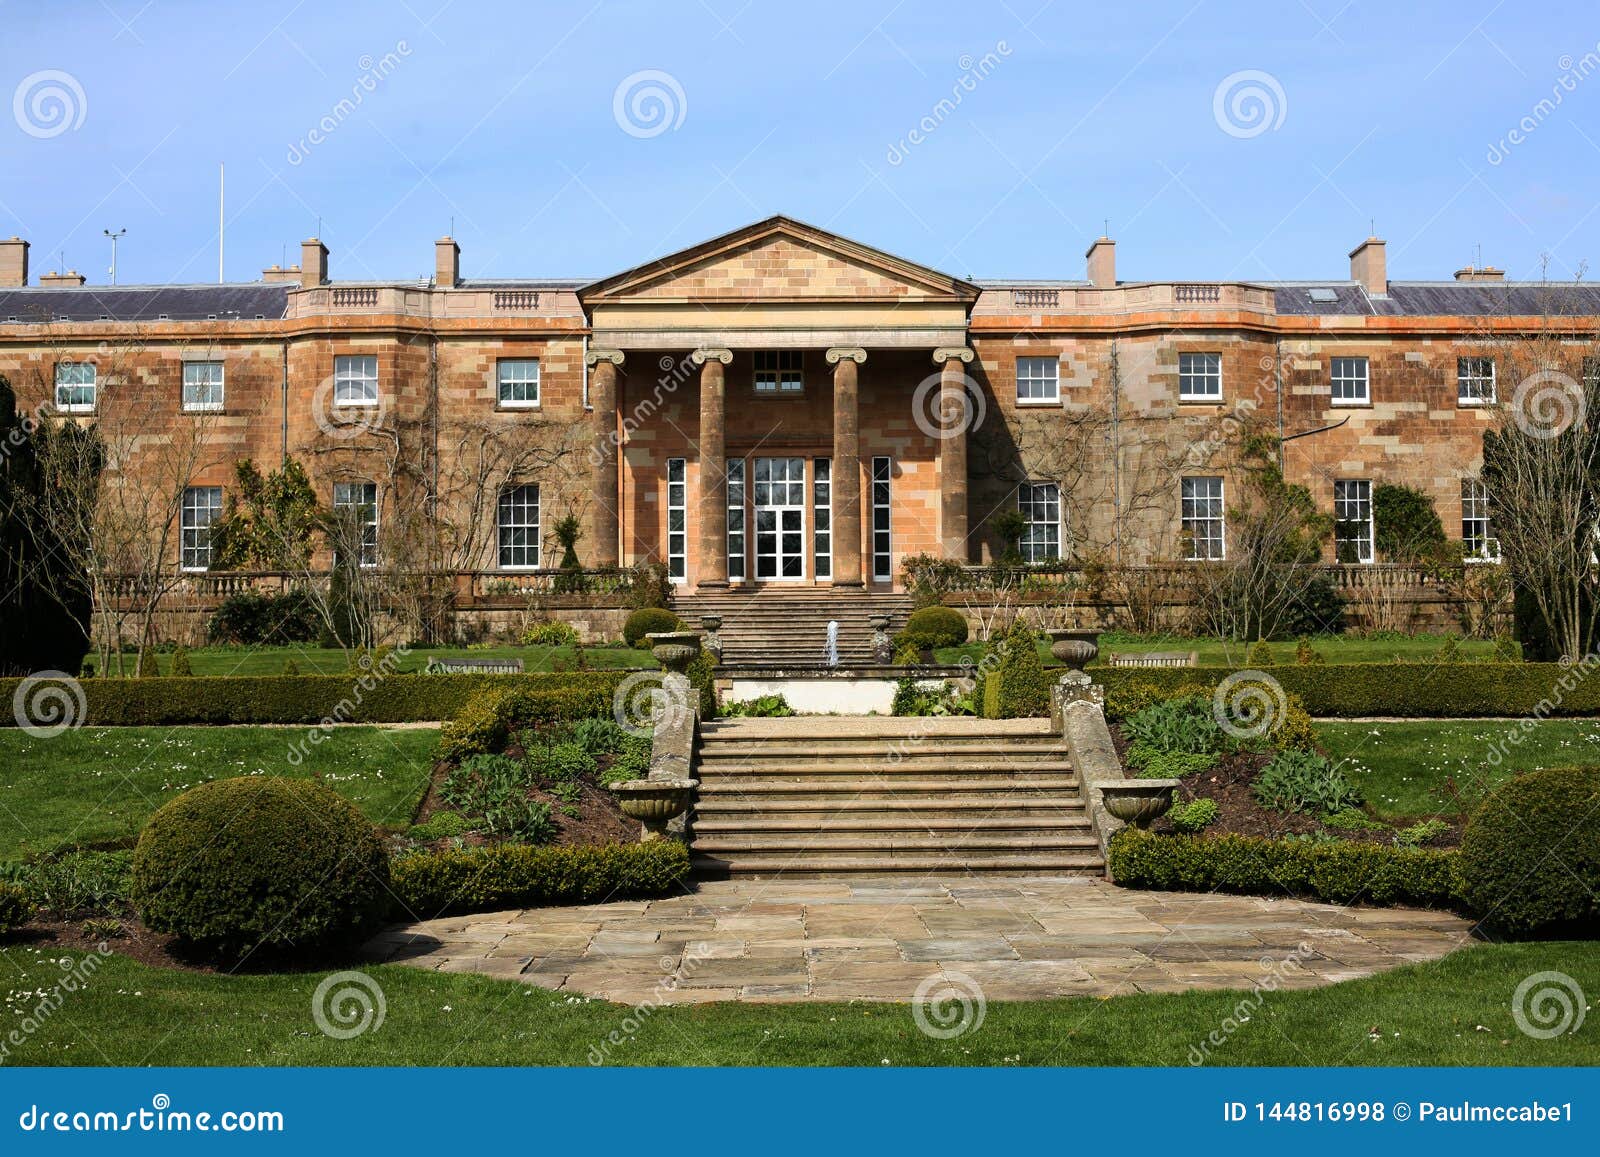 hillsborough castle and gardens historic royal palaces